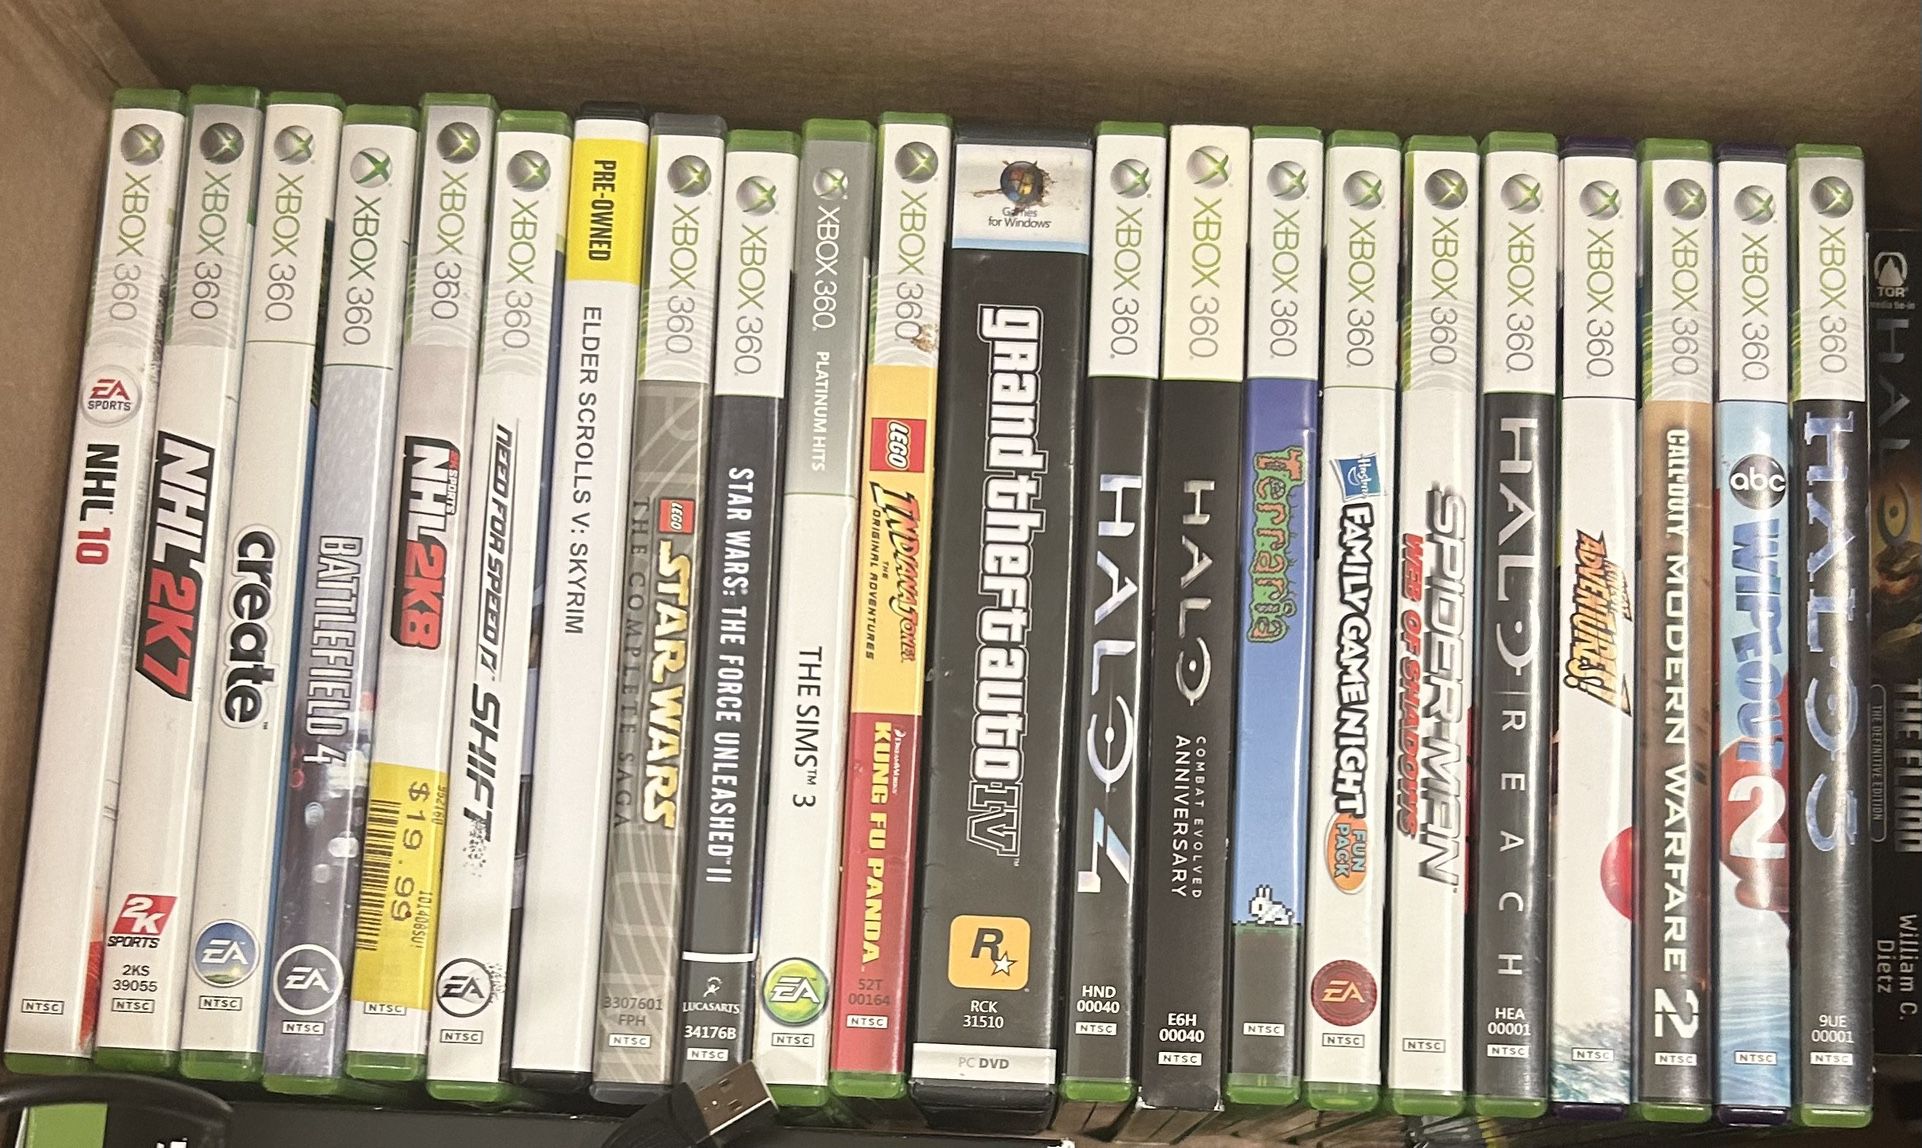 Xbox360 Games